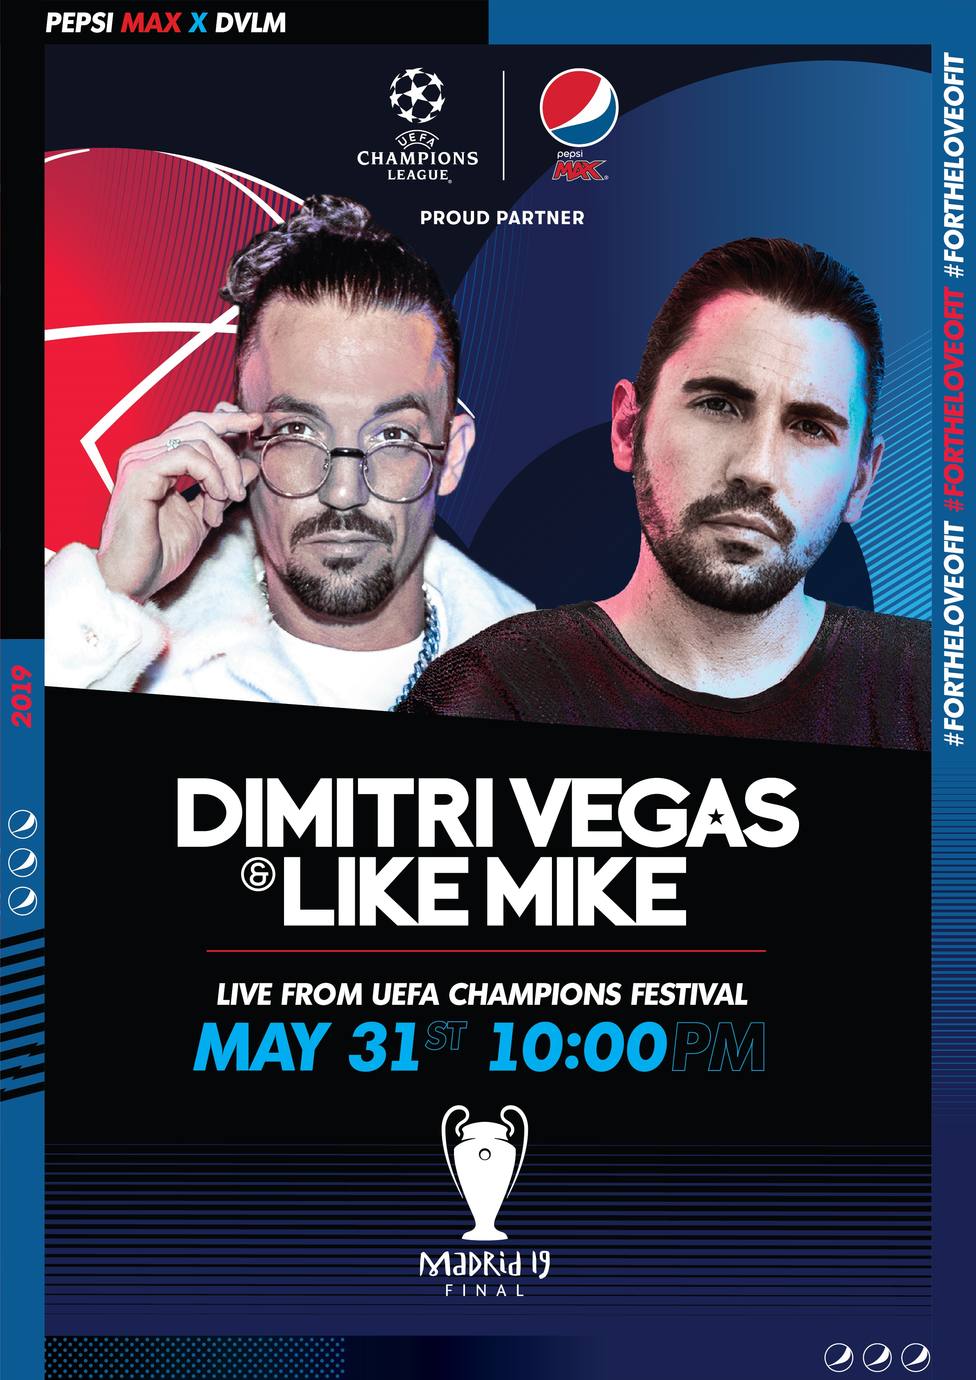 Los DJs Dimitri Vegas & Like Mike actuarán en Sol como parte del cartel de la UEFA Champions Festival de Madrid